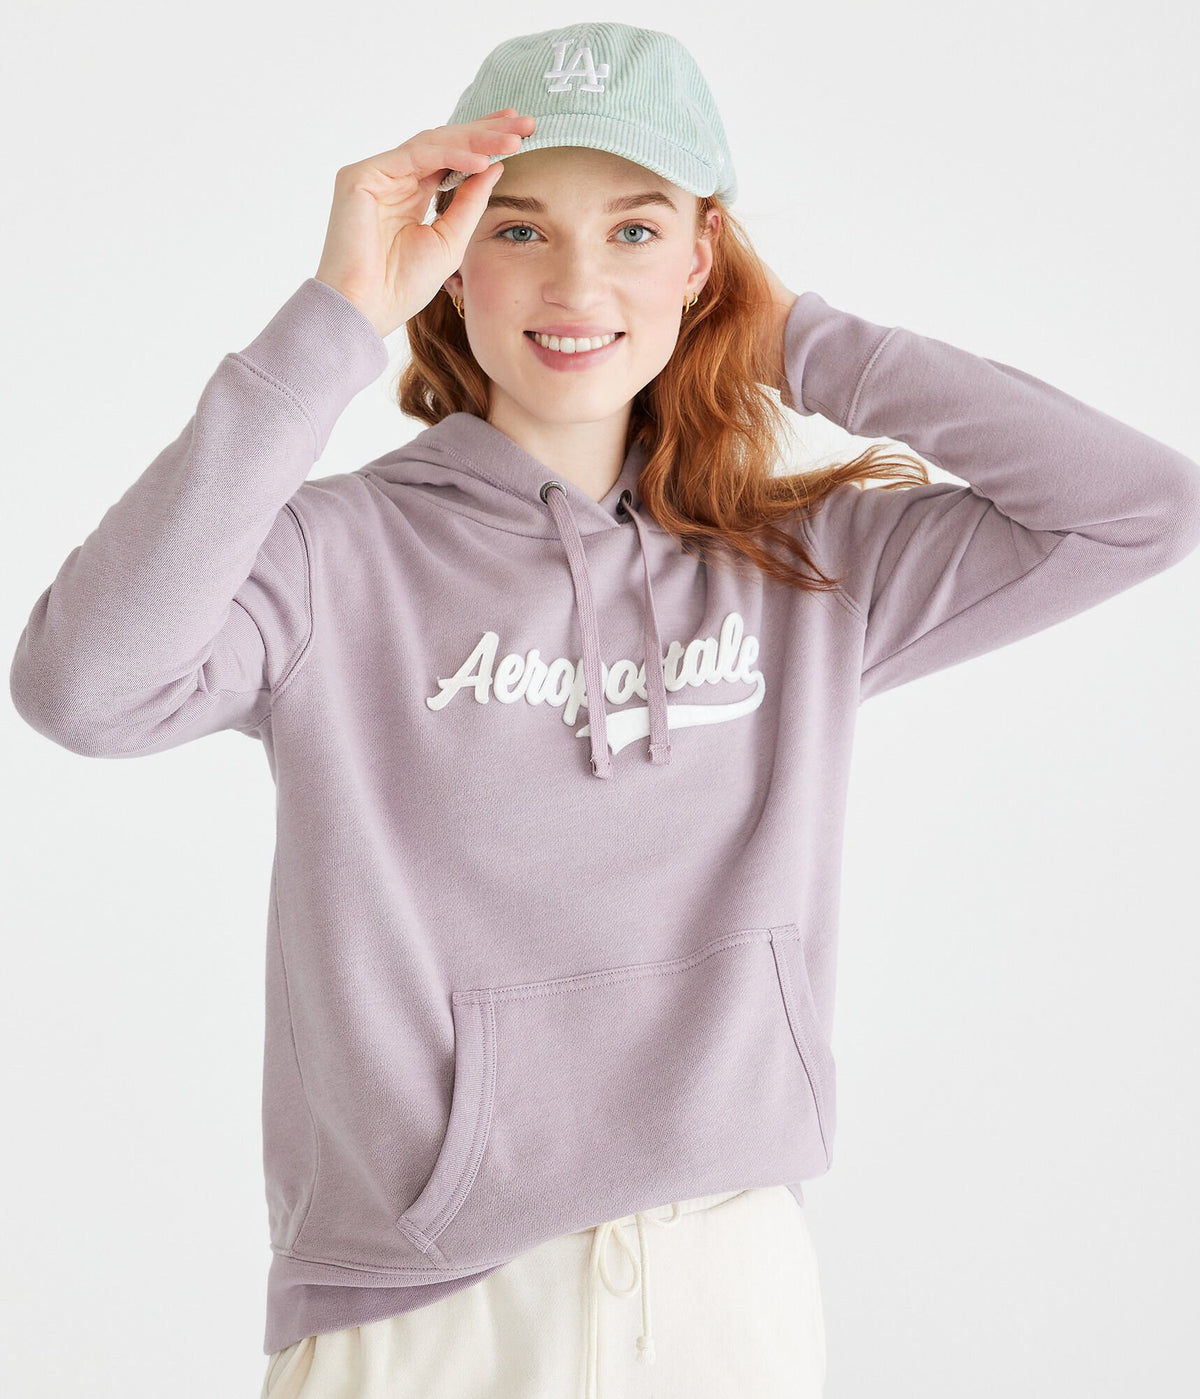 Aeropostale Womens' Aeropostale Script Pullover Hoodie - Light Purple - Size M - Cotton - Teen Fashion & Clothing Lavender Escape